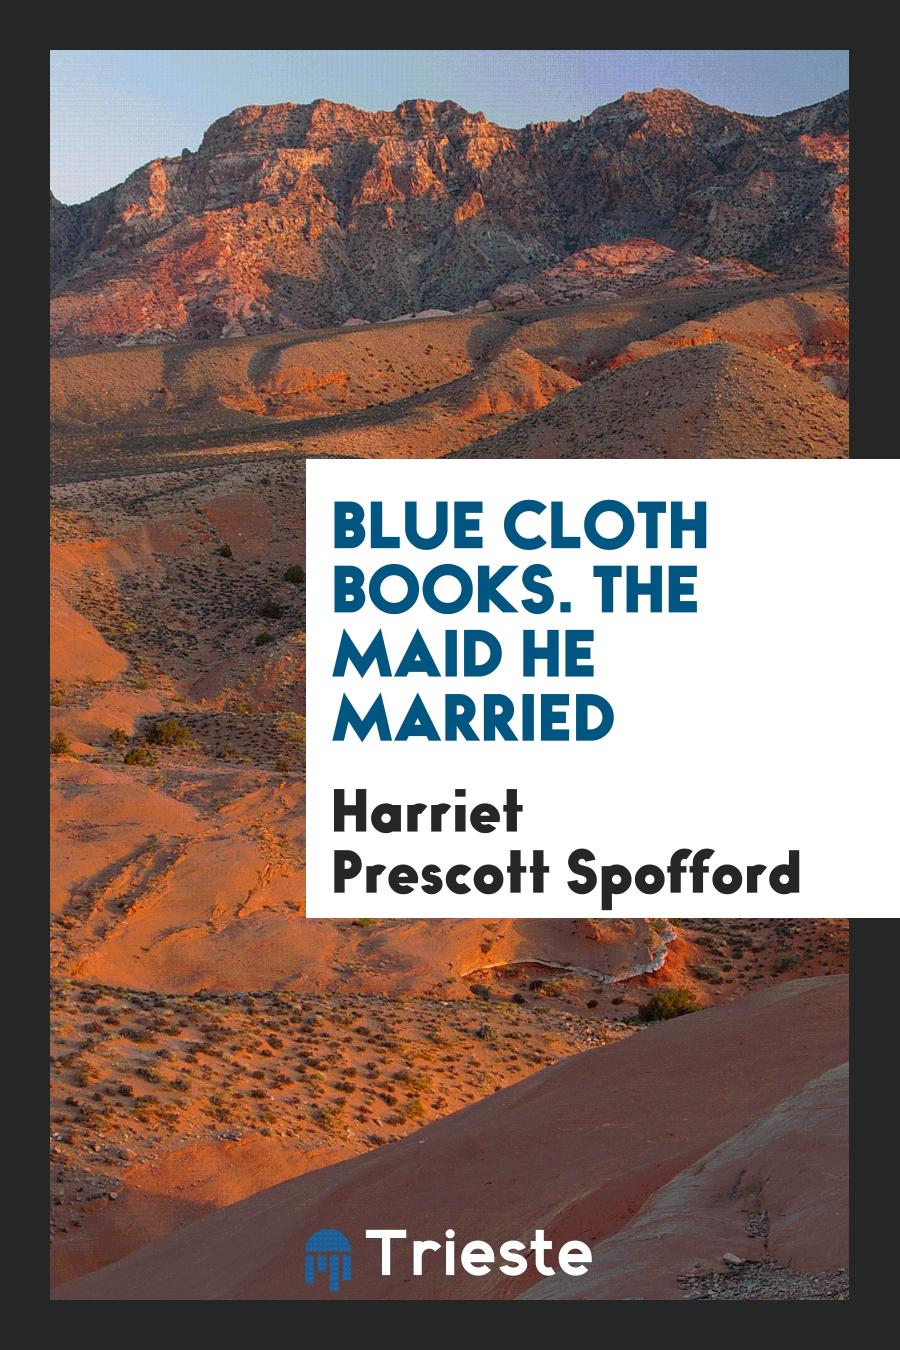 Blue cloth books. The maid he married